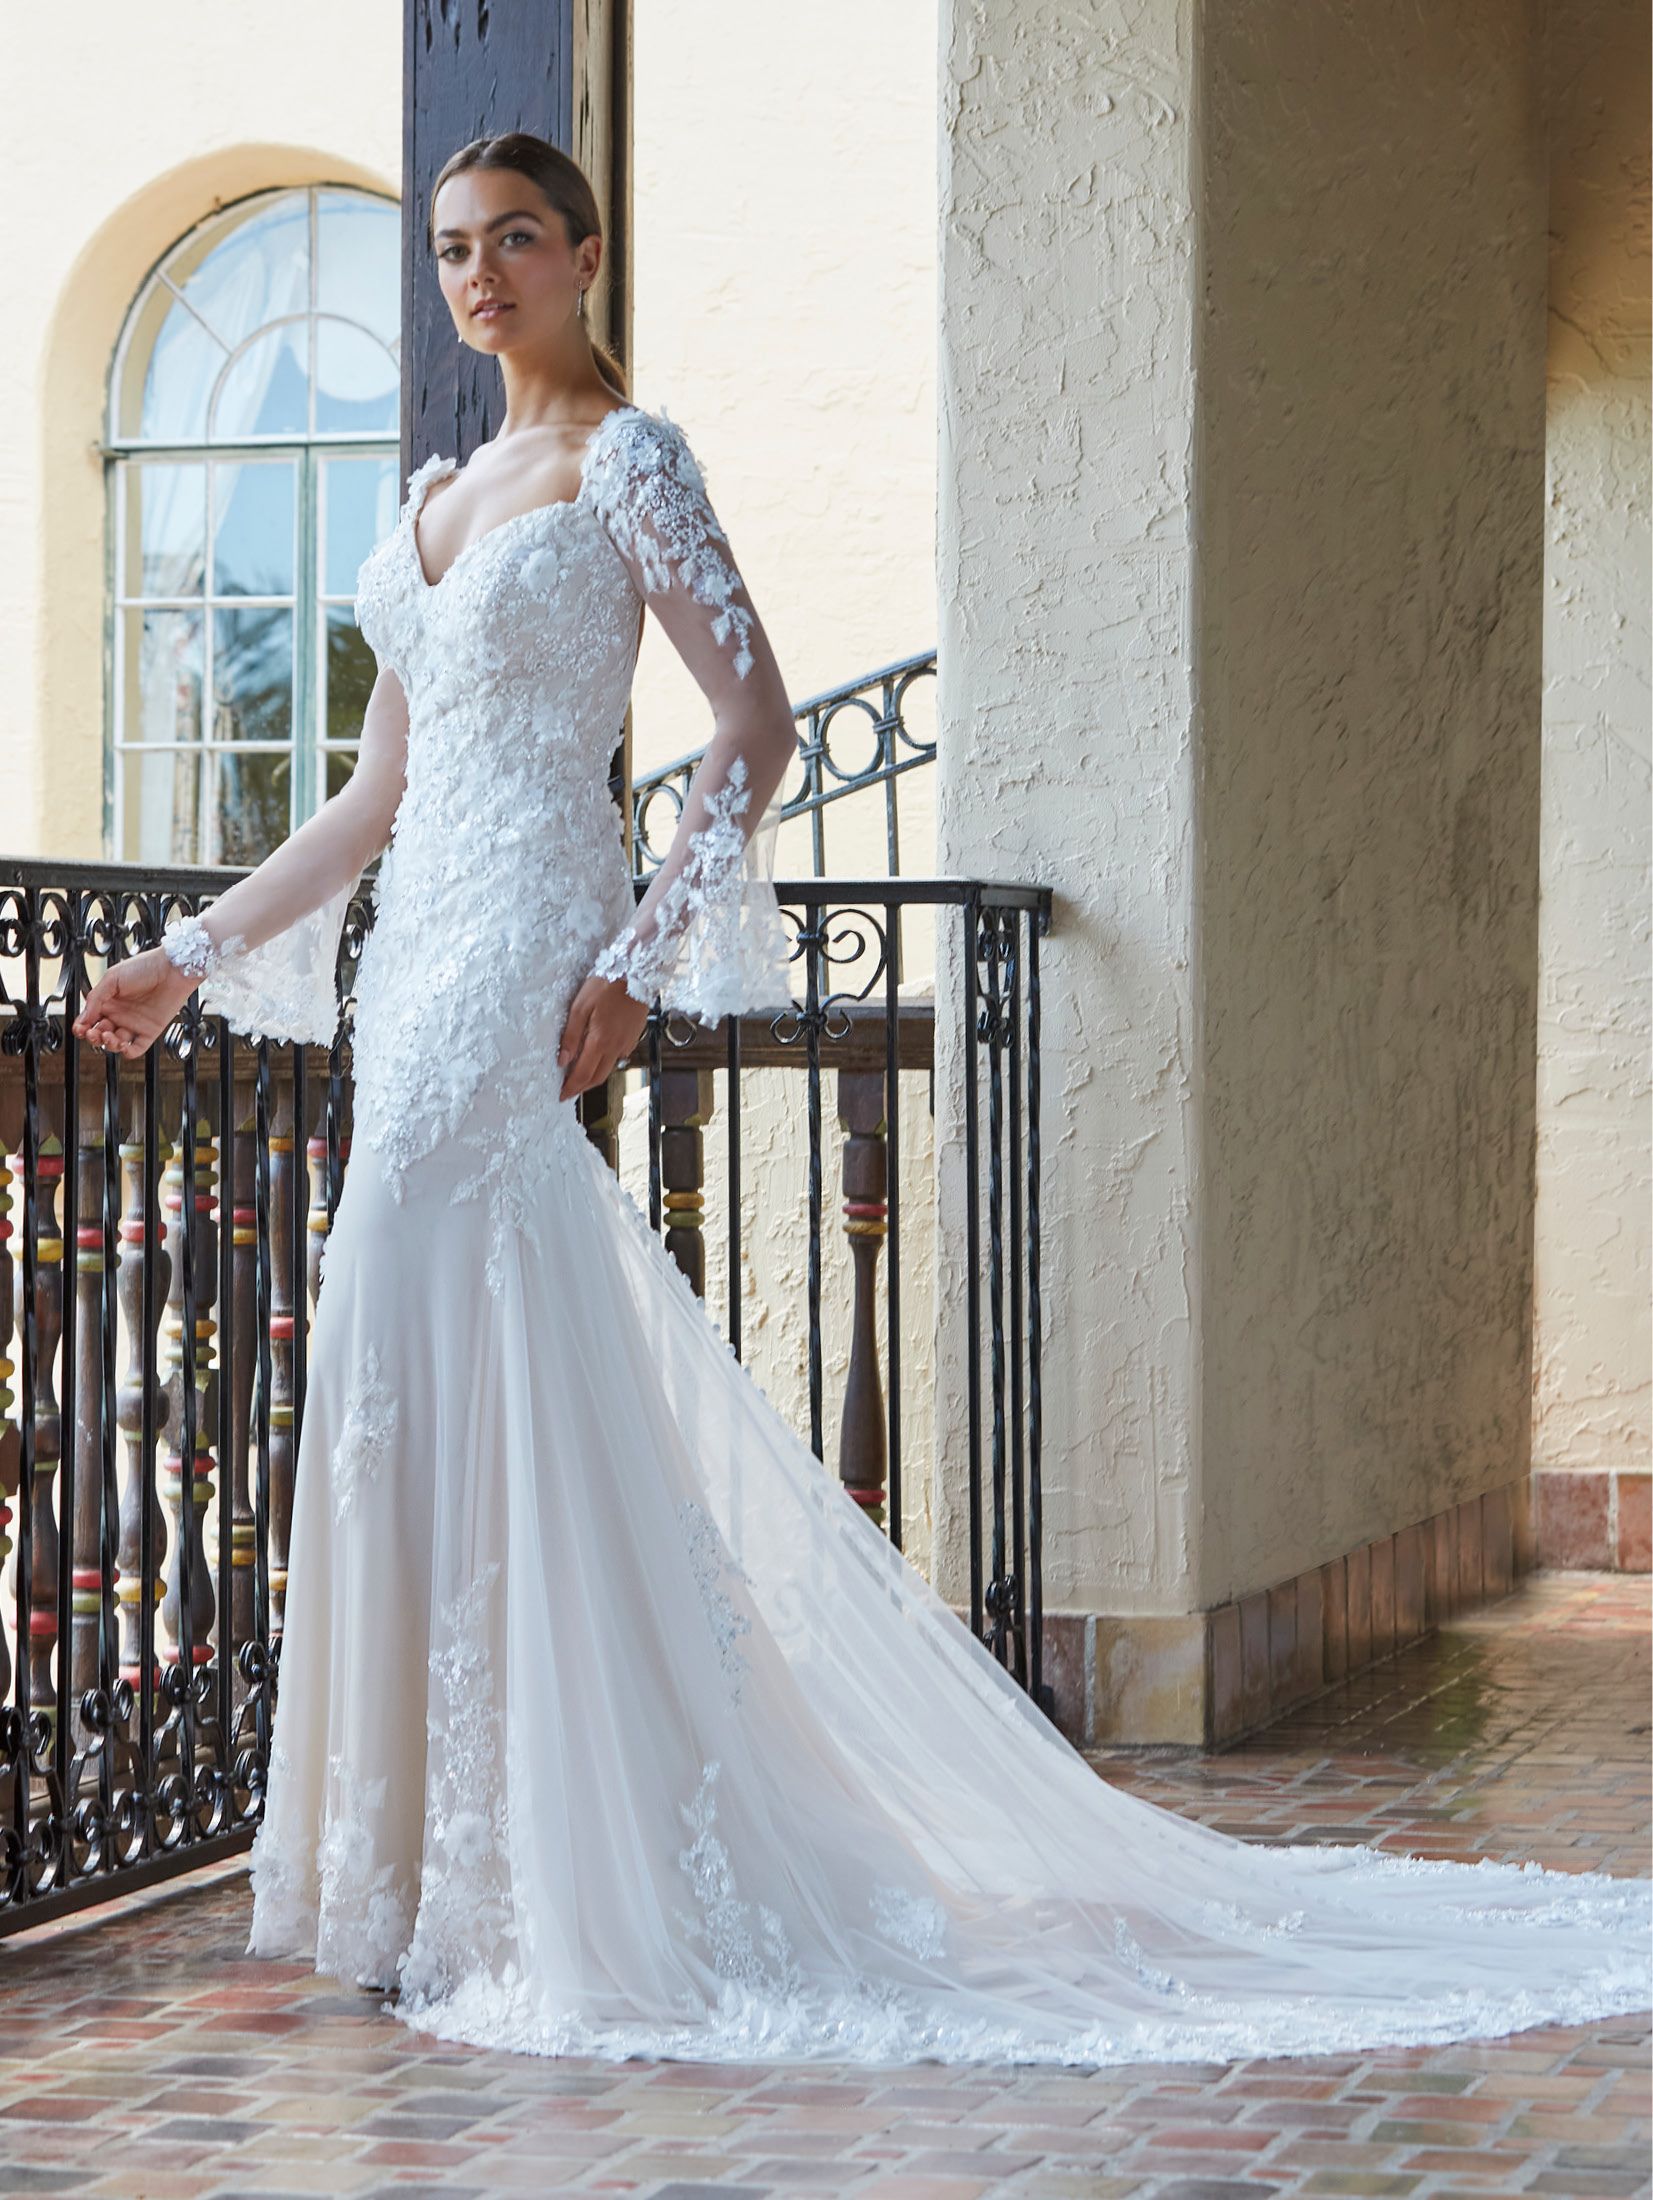 brian deem recommends Christina Model Wedding Dress